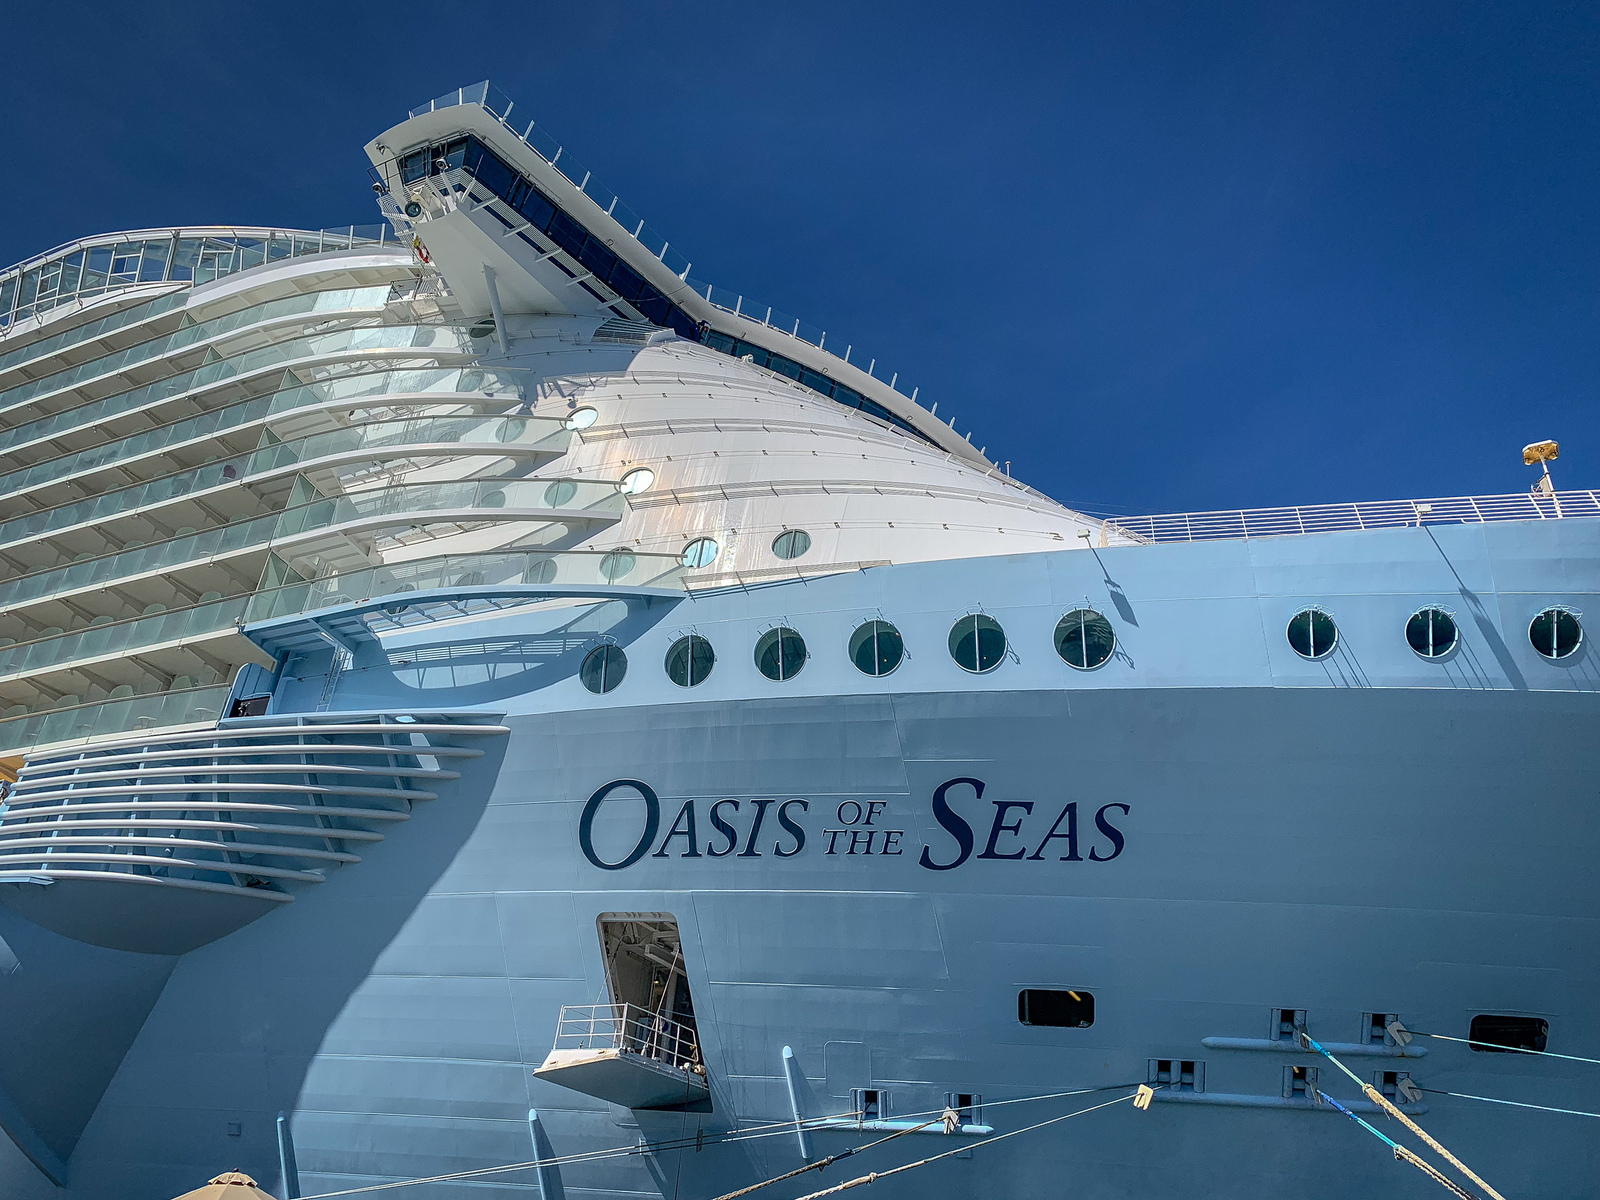 oasis-of-the-seas-cruise-ship-3d-model-max-obj-3ds-fbx-c4d-lwo